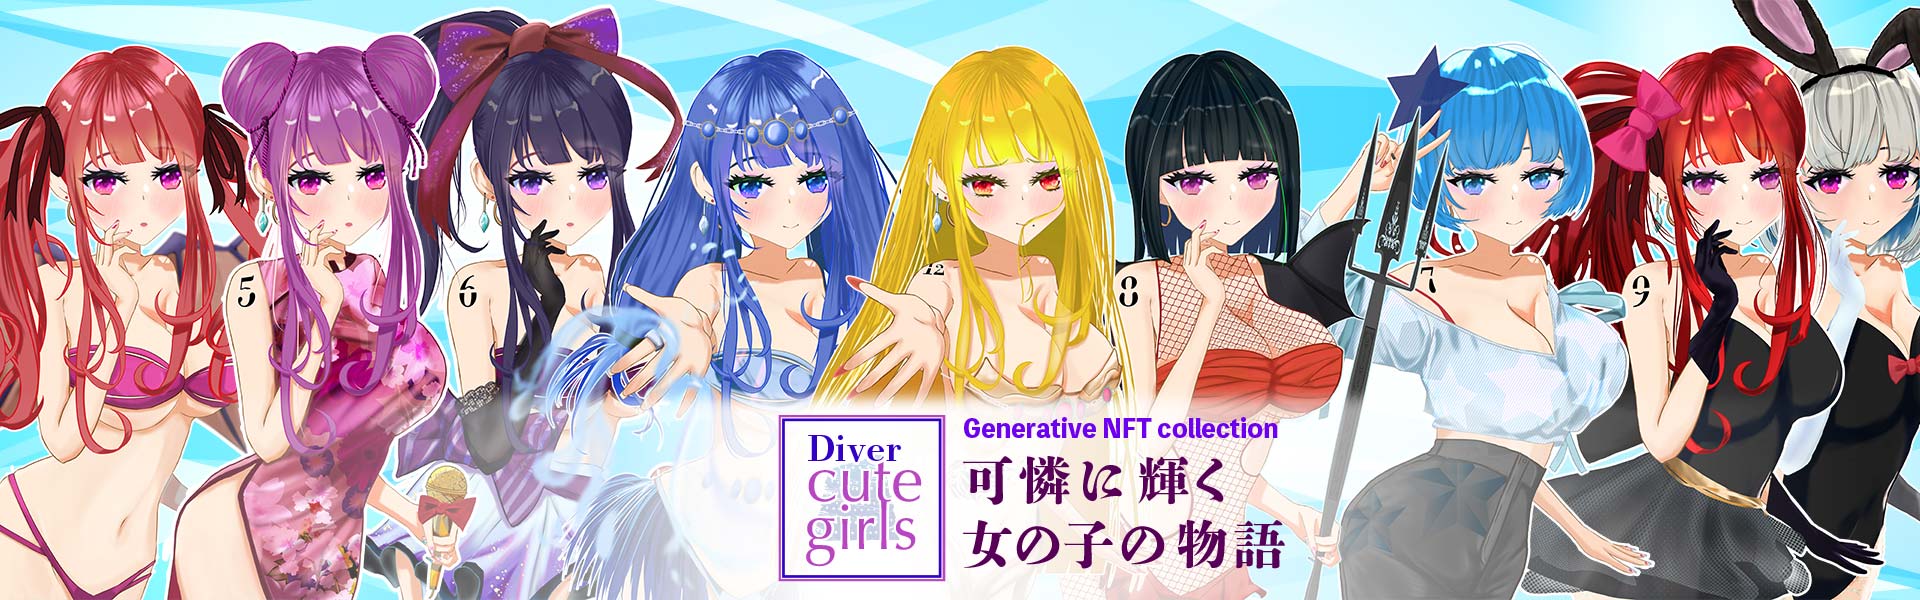 Diver cute girlsNFTコレクション